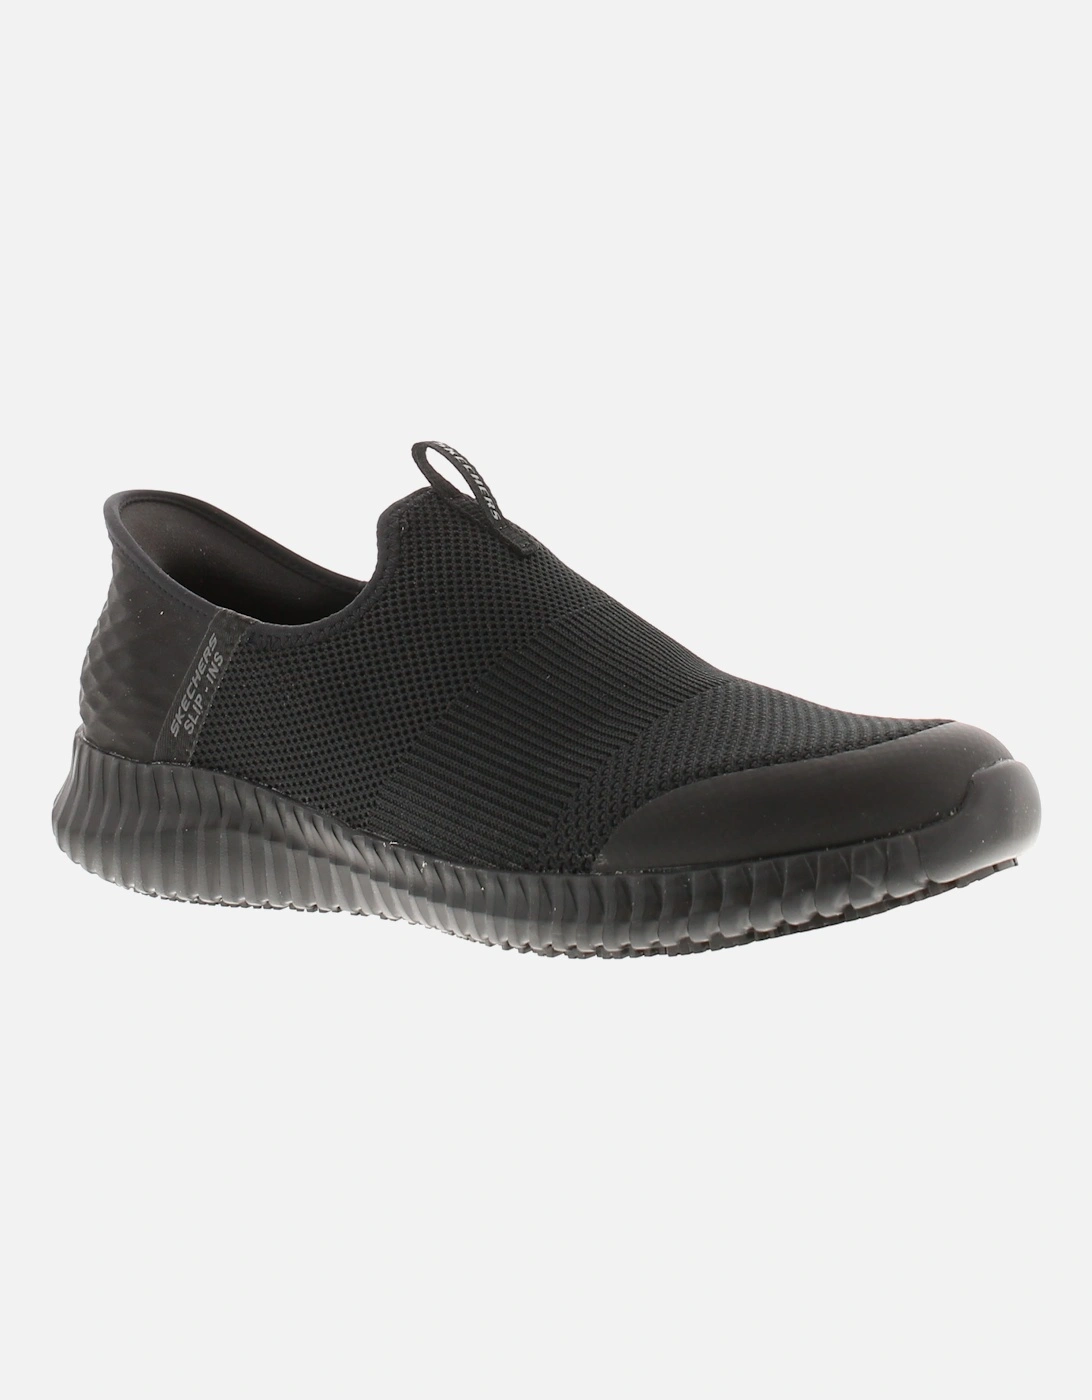 Womens Safety Shoes Trainers Cessnock Gwynedd Slip On Black UK Size 4, 6 of 5